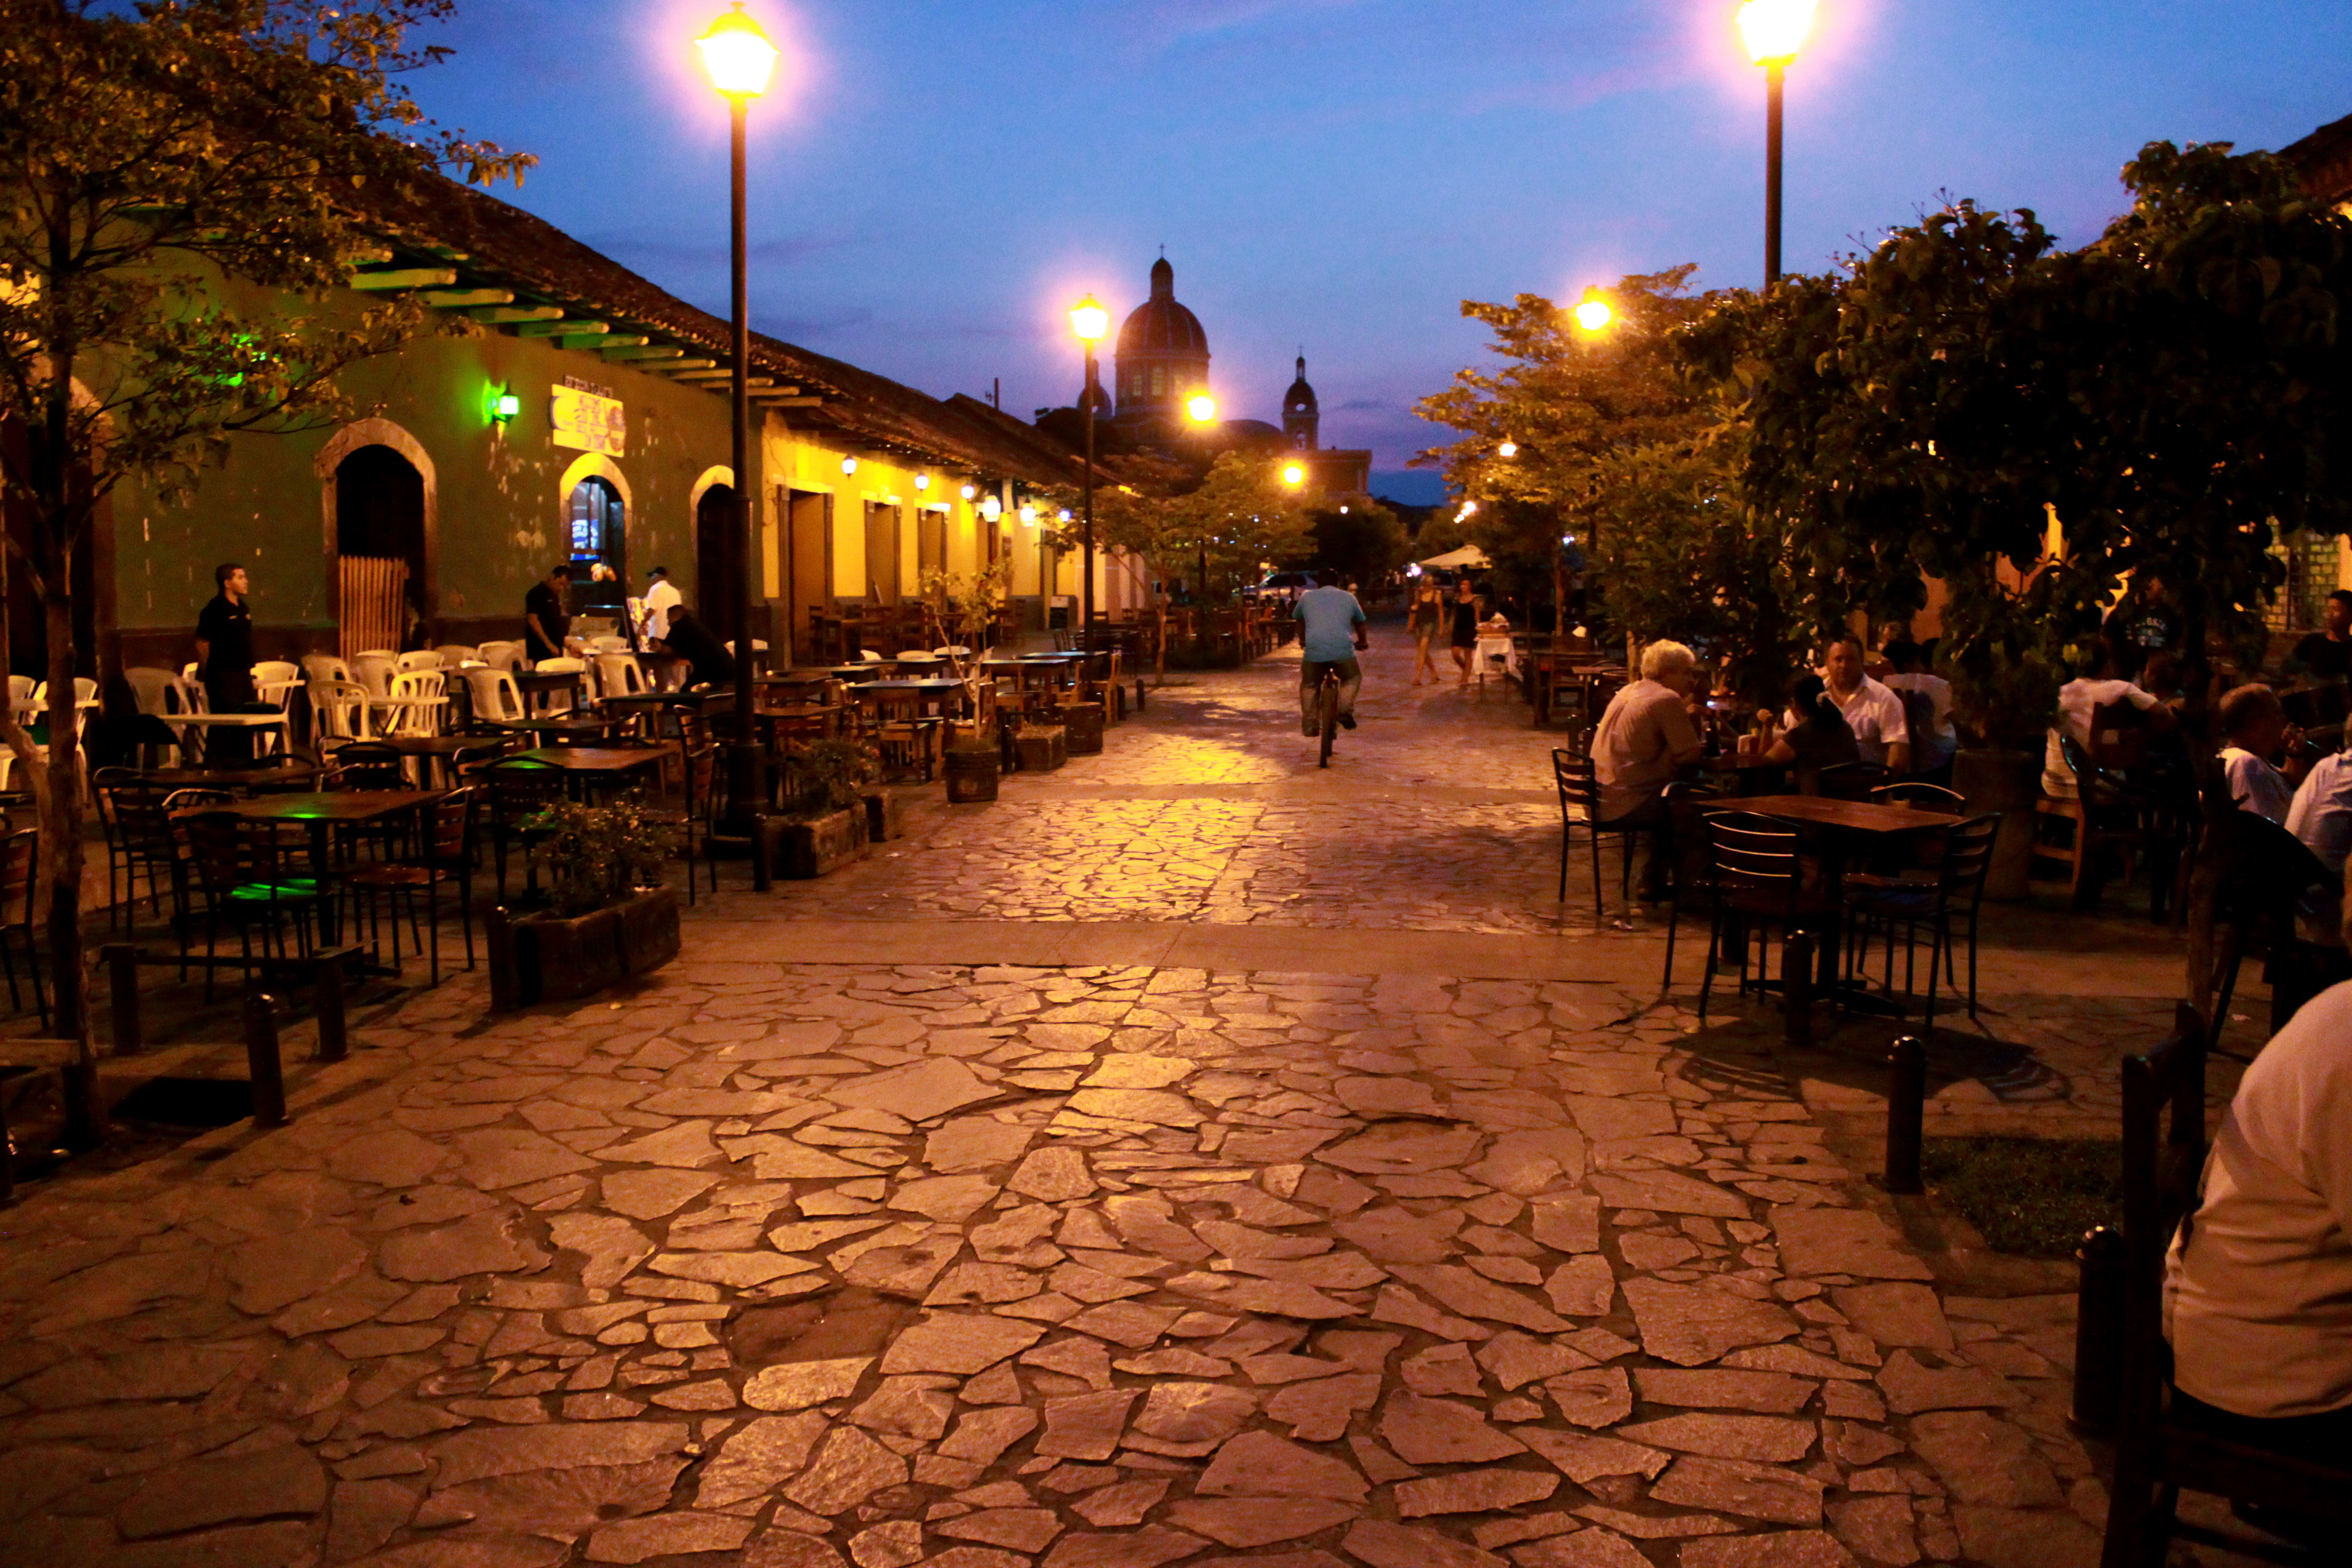 Calle Calzado (the main drag of Granada)